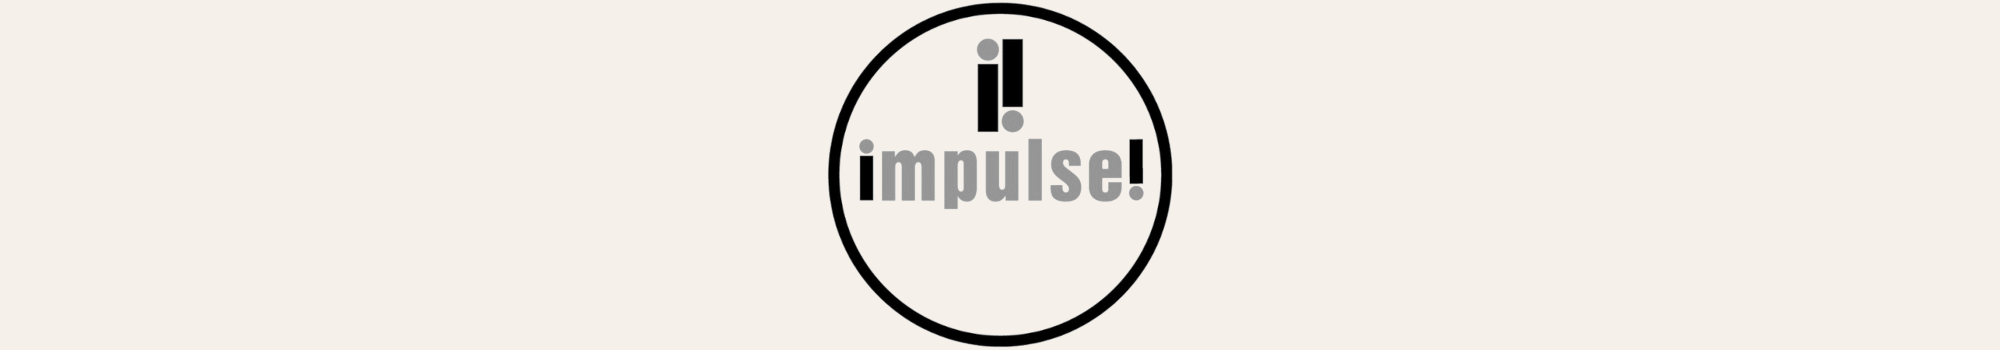 Impulse! Records logotyp